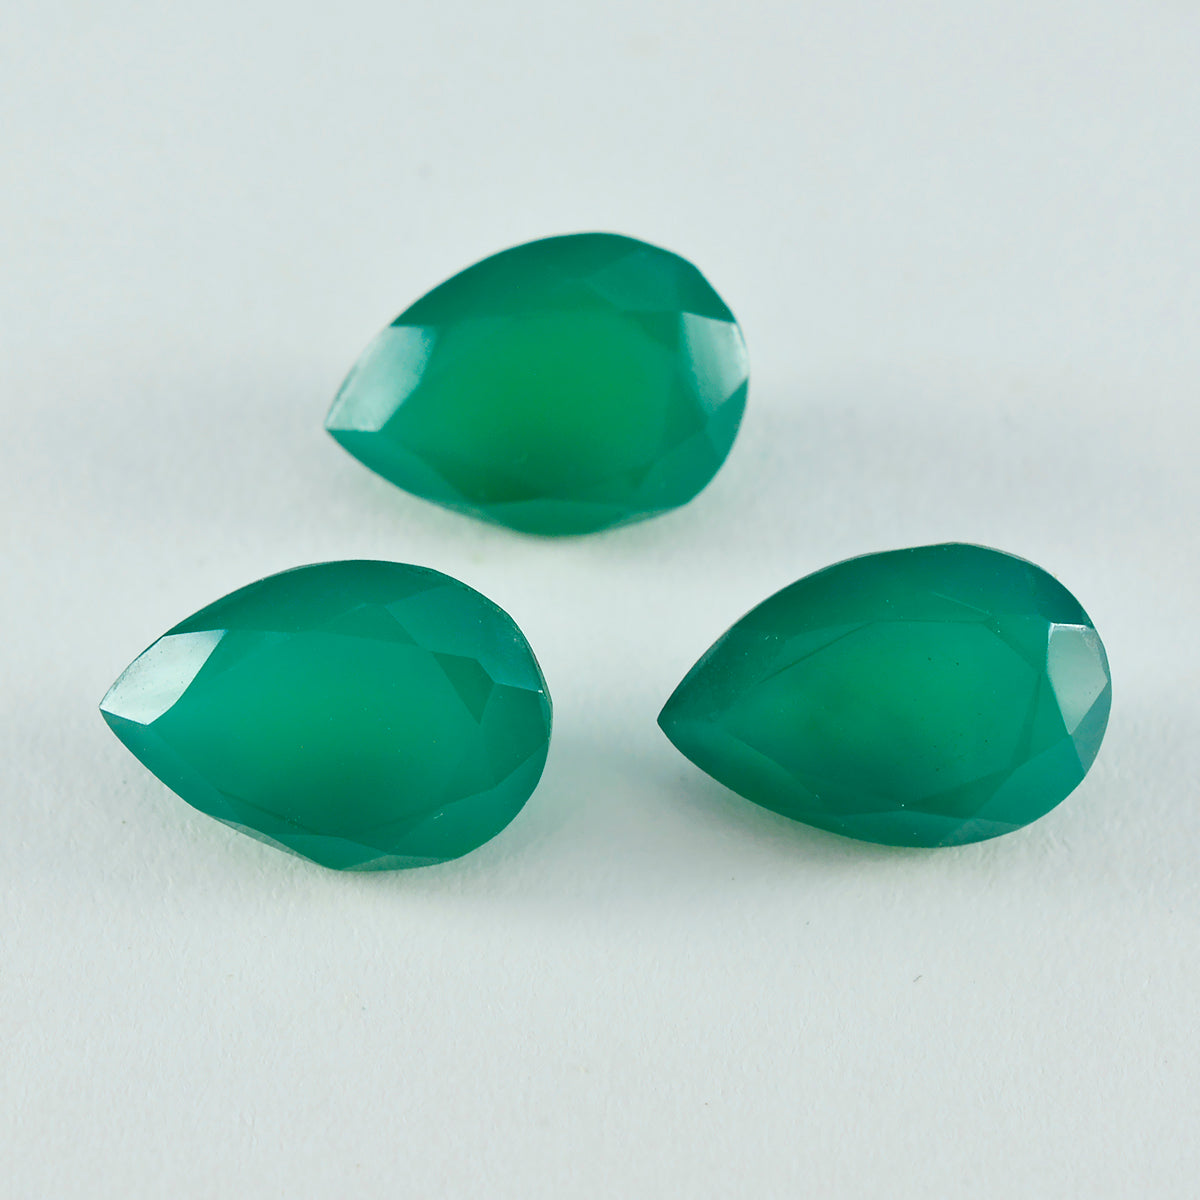 Riyogems 1PC Natural Green Jasper Faceted 12x16 mm Pear Shape A1 Quality Loose Gemstone